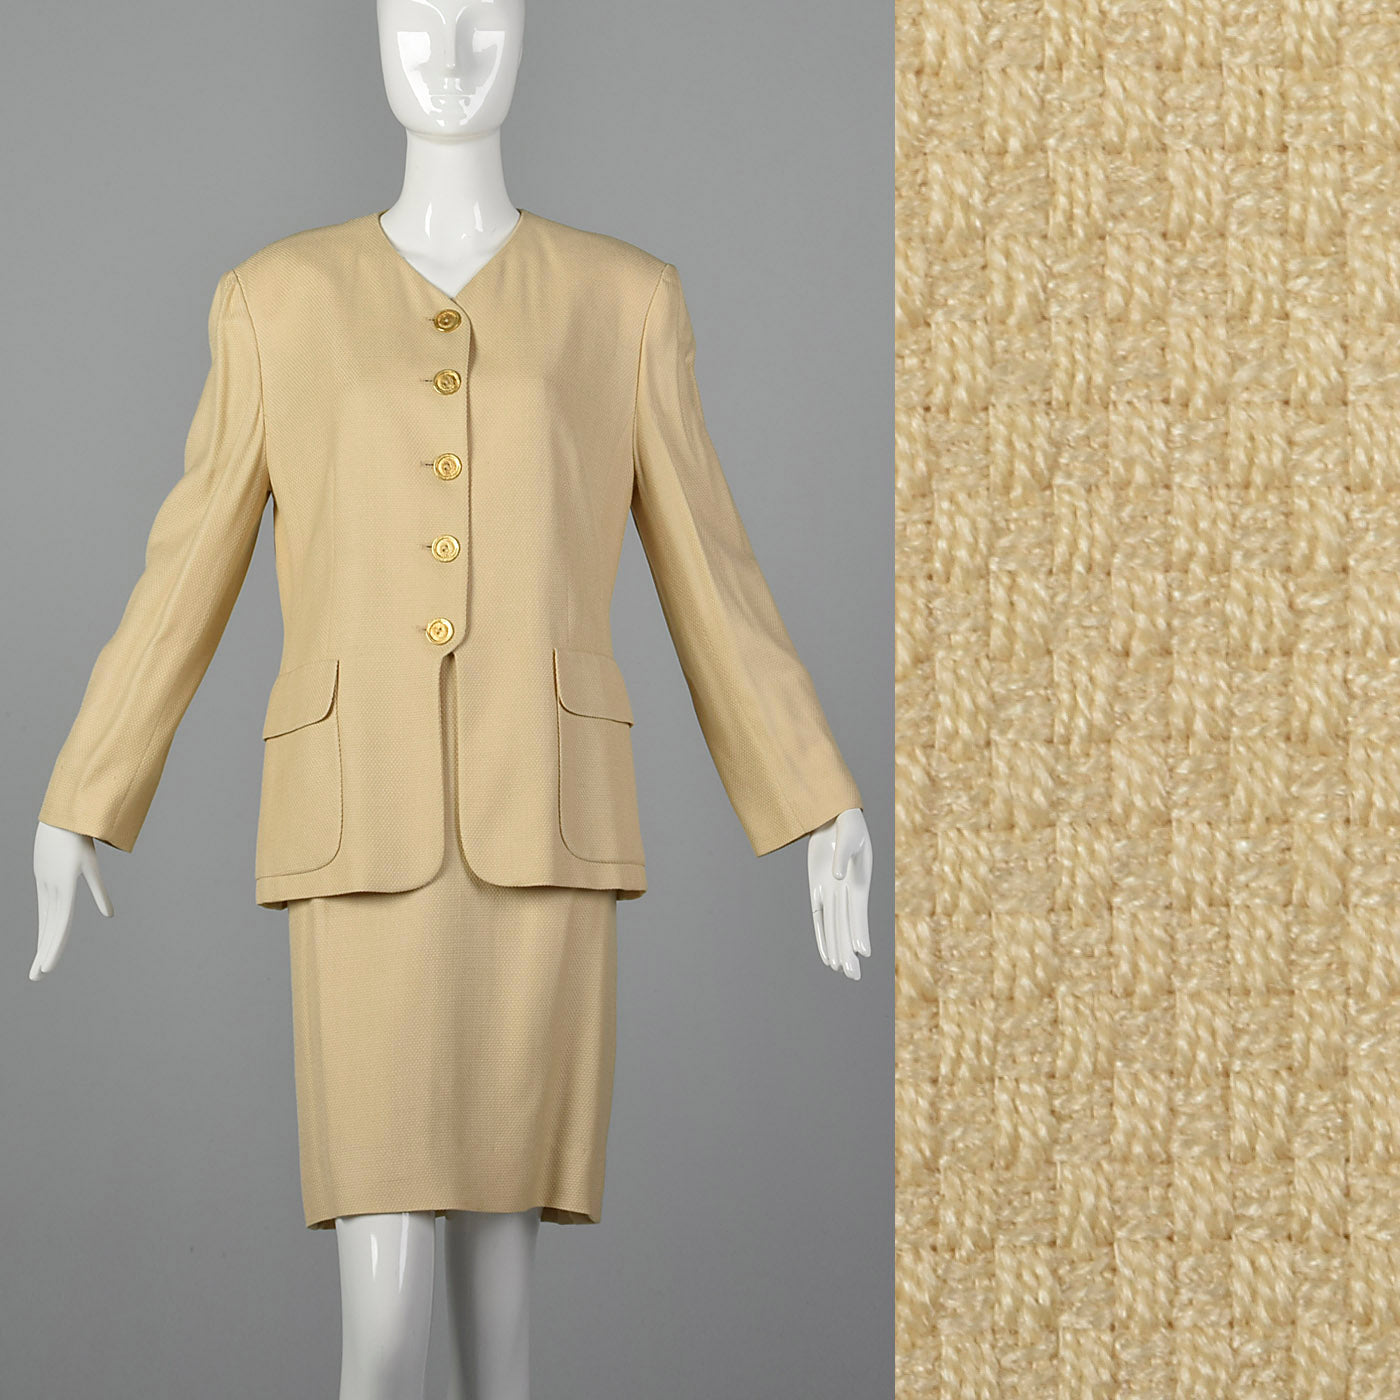 1980s Louis Feraud Beige Skirt Suit